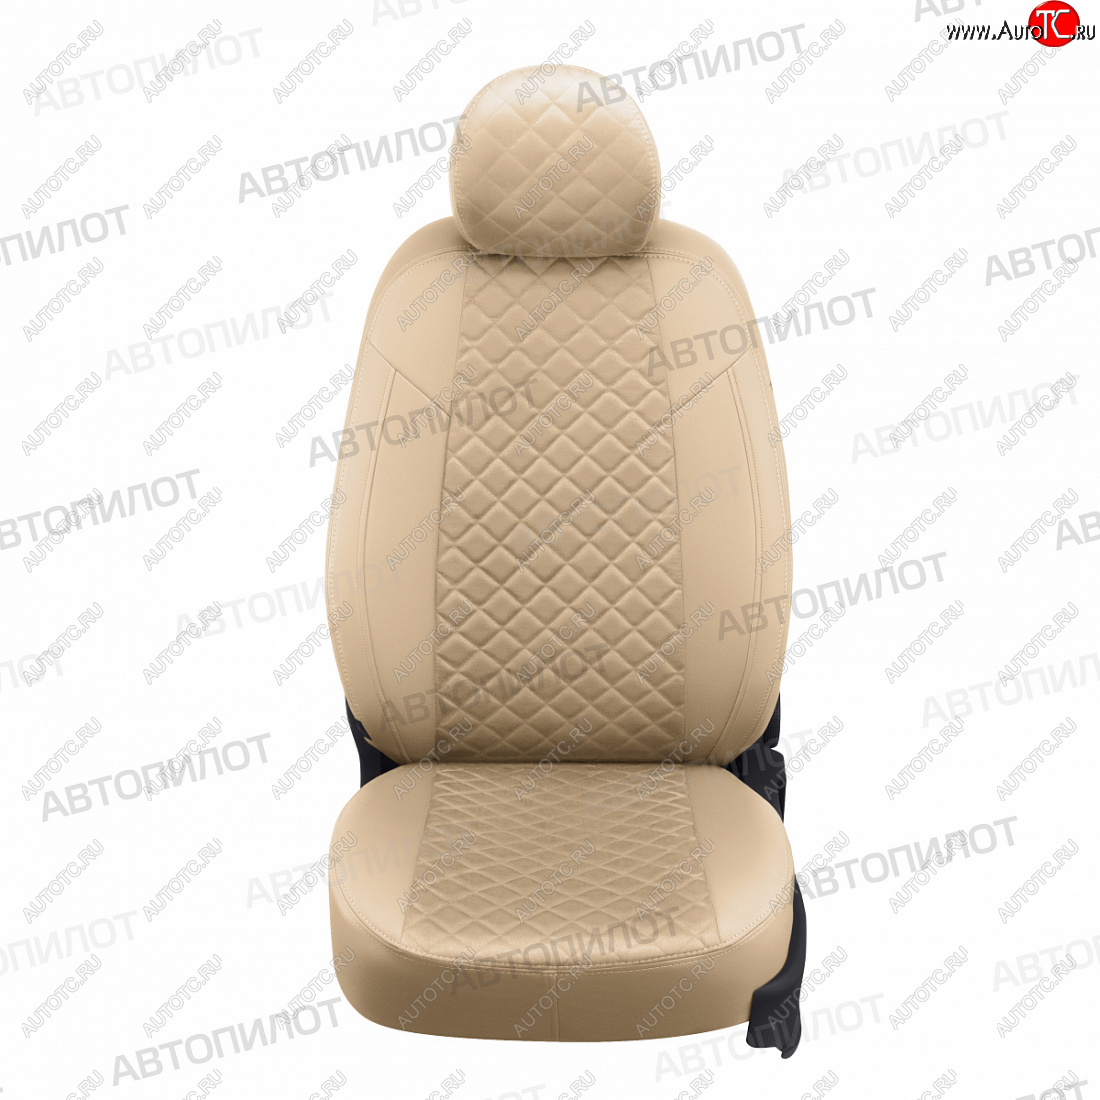 13 999 р. Чехлы сидений (экокожа/алькантара) Автопилот Ромб  Hyundai Sonata  YF (2009-2014) (бежевый)